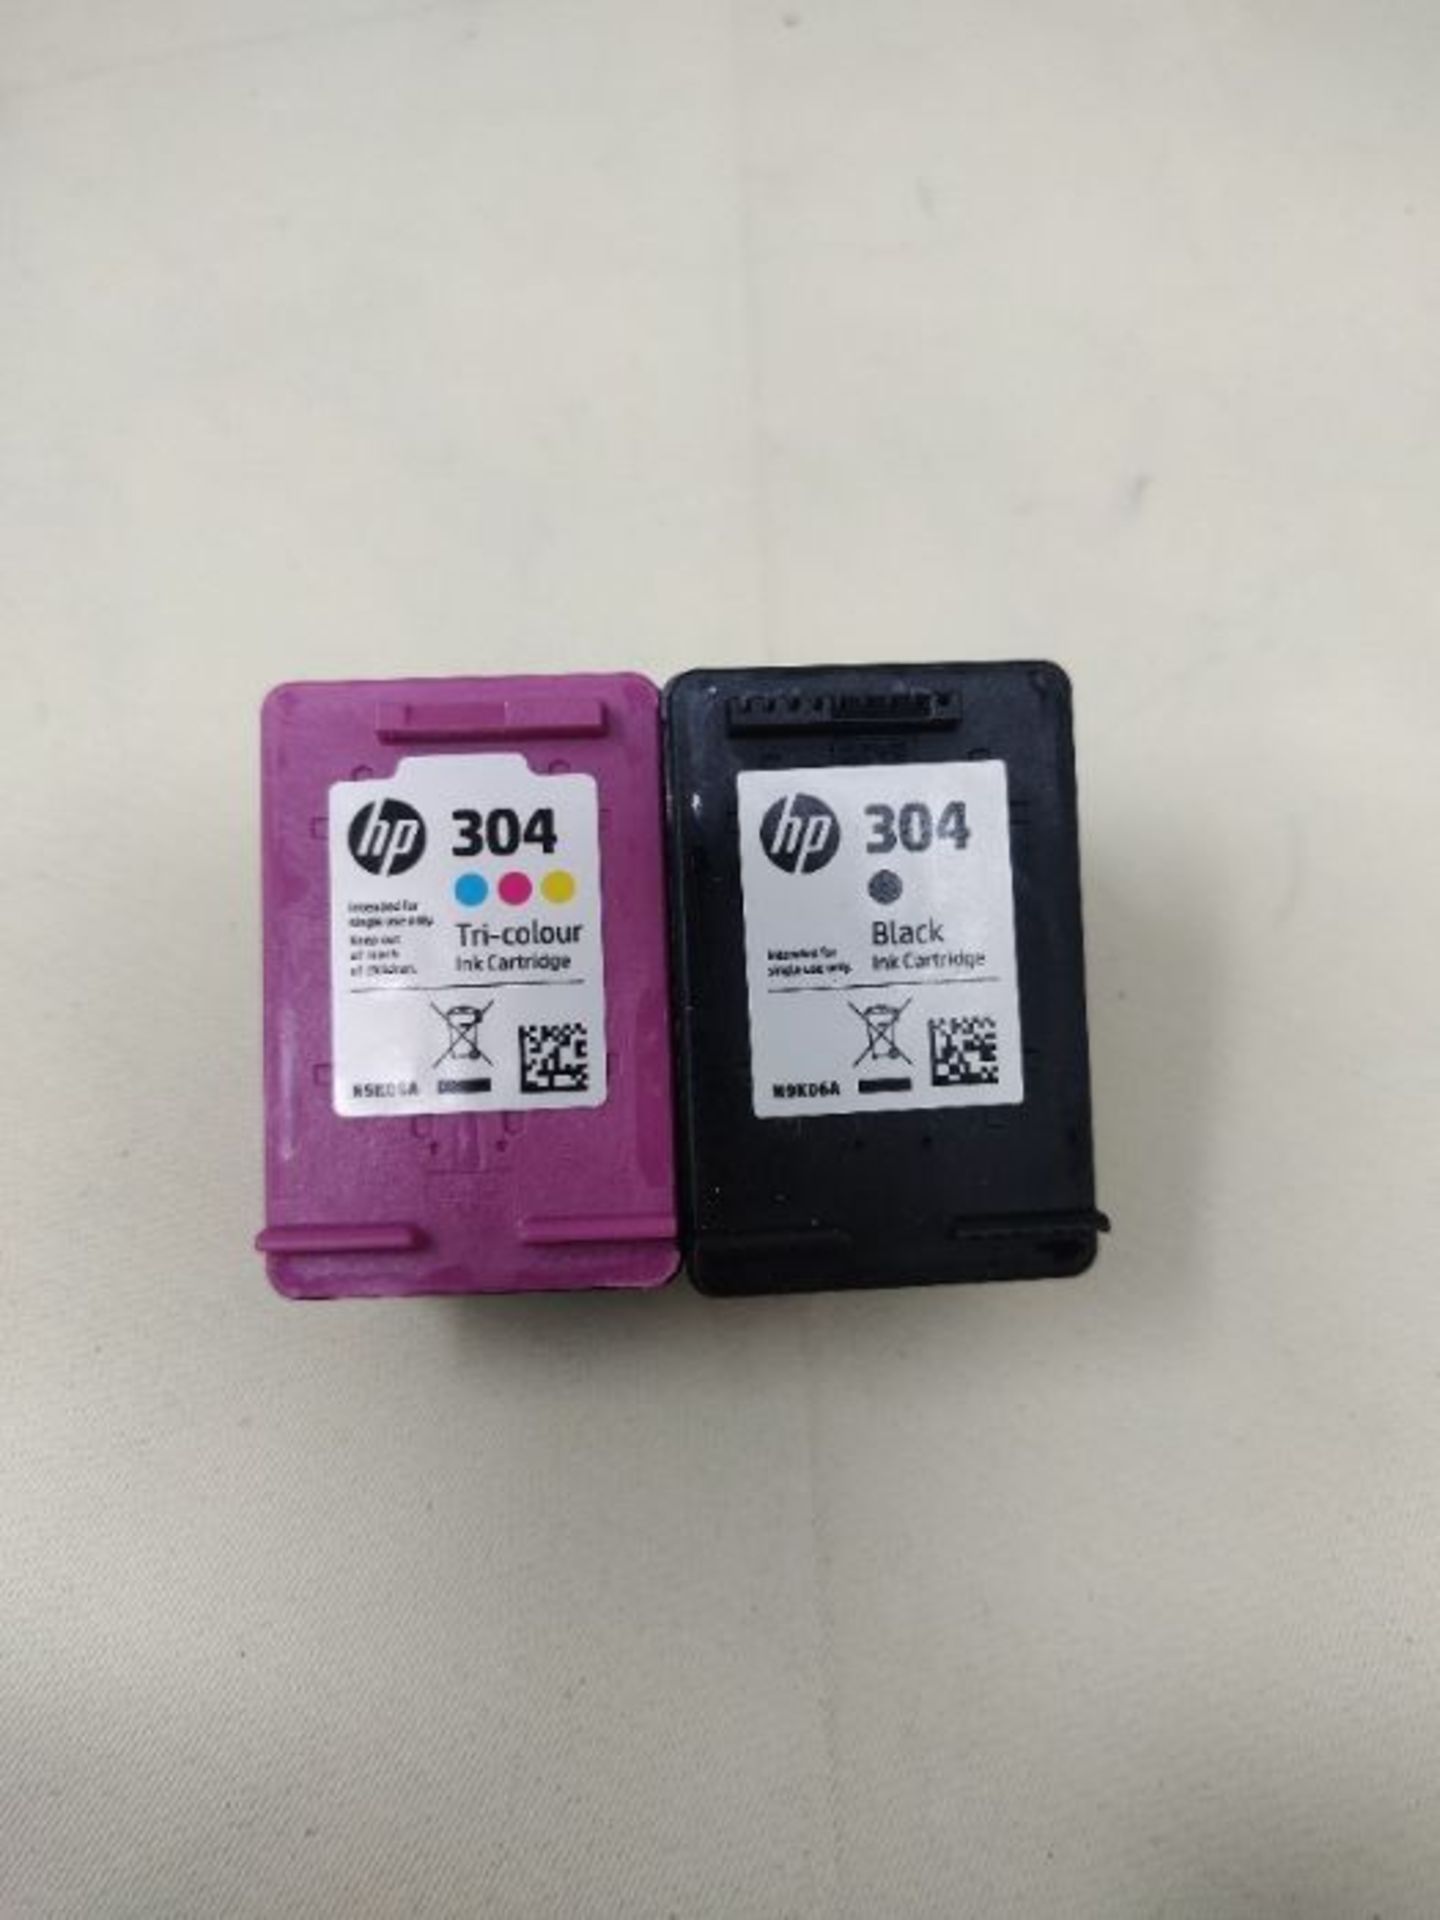 HP 3JB05AE 304 Original Ink Cartridges, Black and Tri-Colour, Multipack - Image 2 of 2